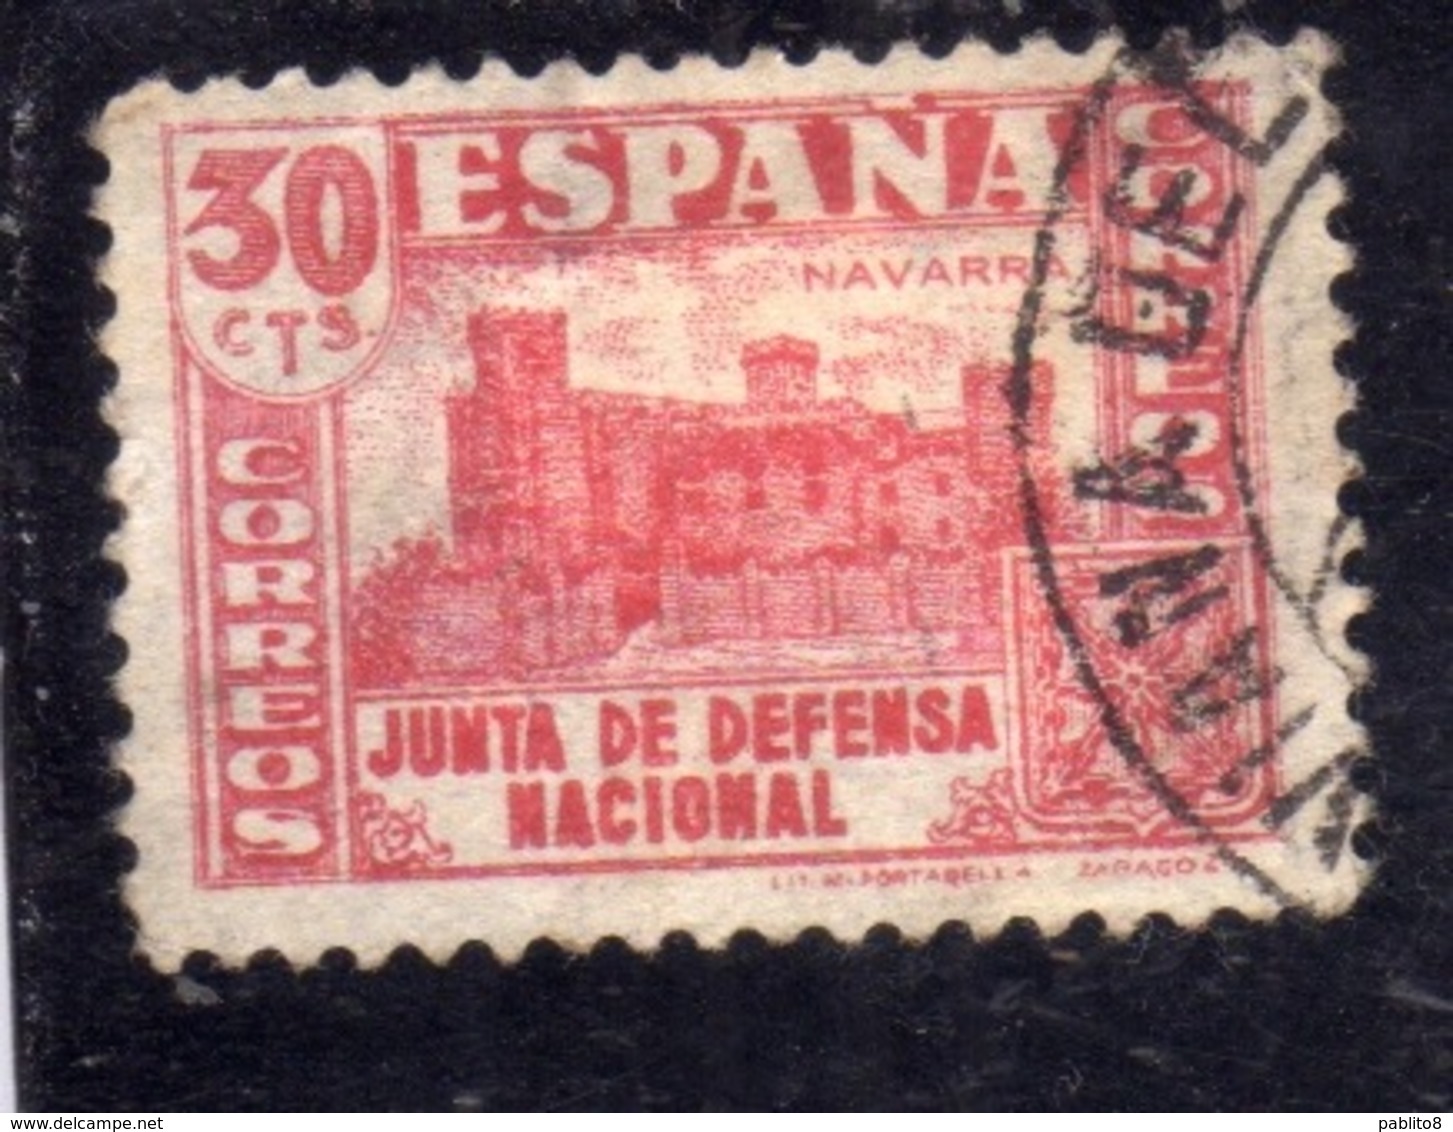 SPAIN ESPAÑA SPAGNA 1936 XAVIER CASTLE NAVARRE JUNTA DE DEFENSA NATIONAL CENT. 30c USED USATO OBLITERE' - Gebruikt